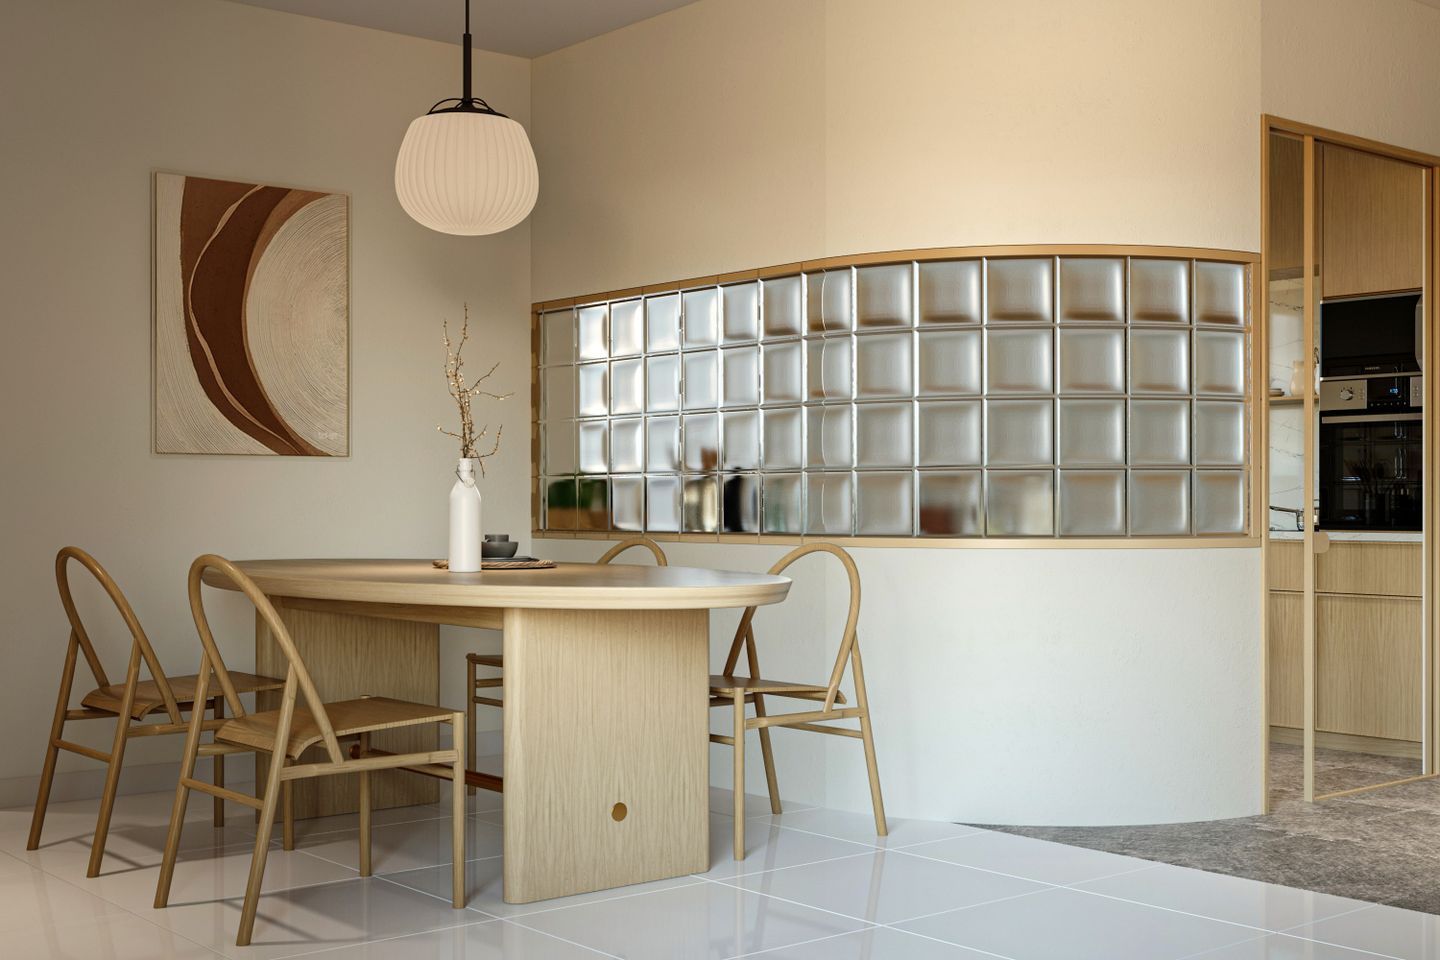 Minimal Scandinavian Interior Design With Muted Earthy Tones - Livspace